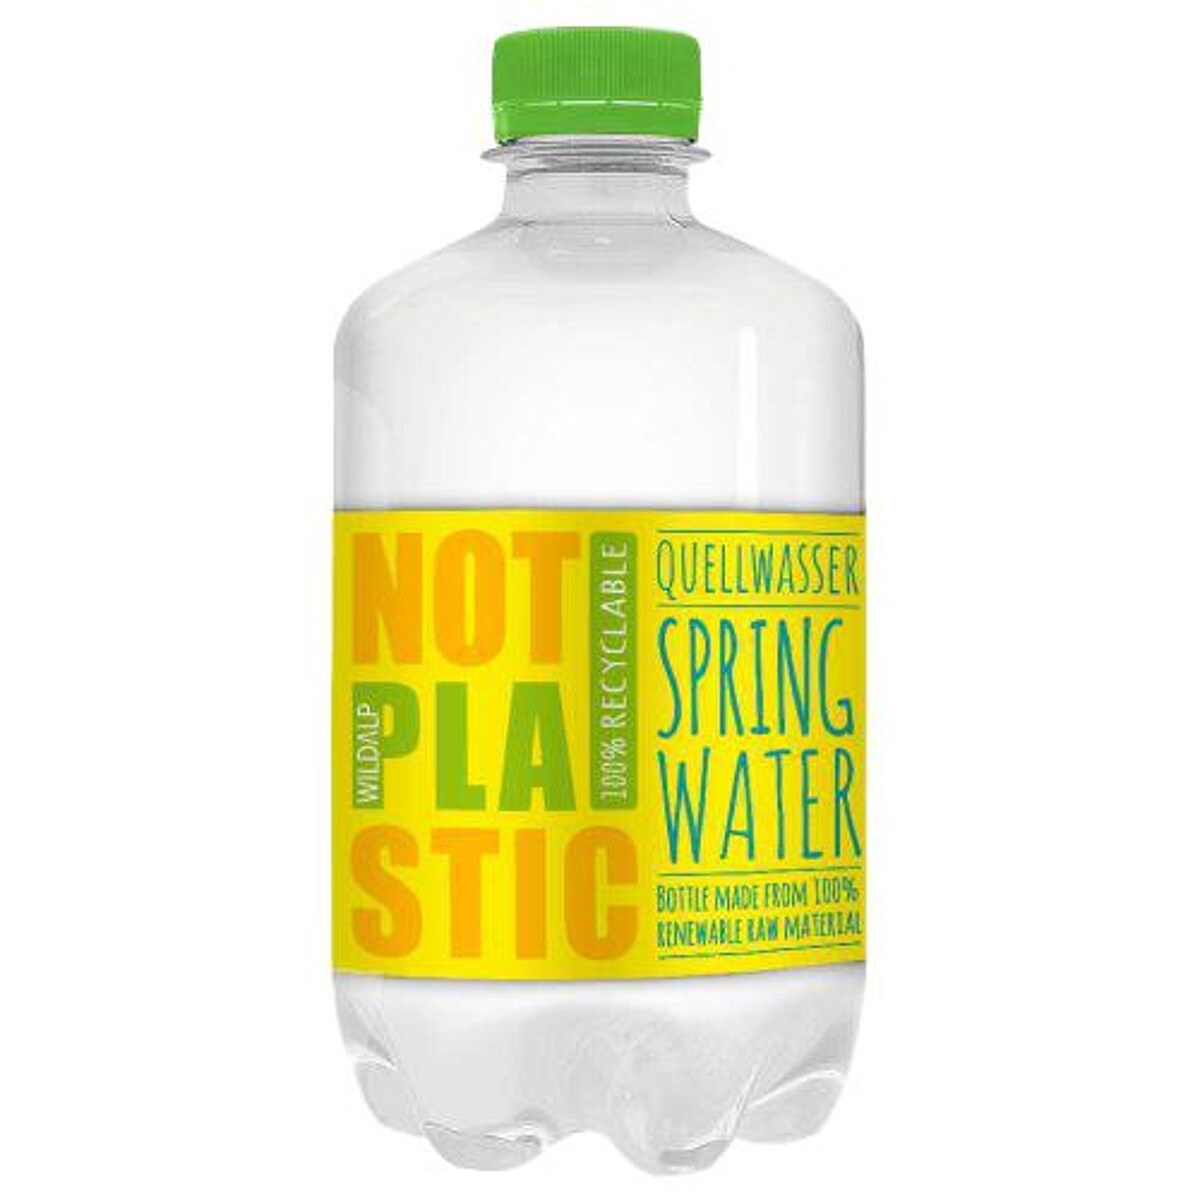 NaKu-Wasserflasche aus 20 % recyceltem PLA. (Foto: TotalEnergies Corbion)